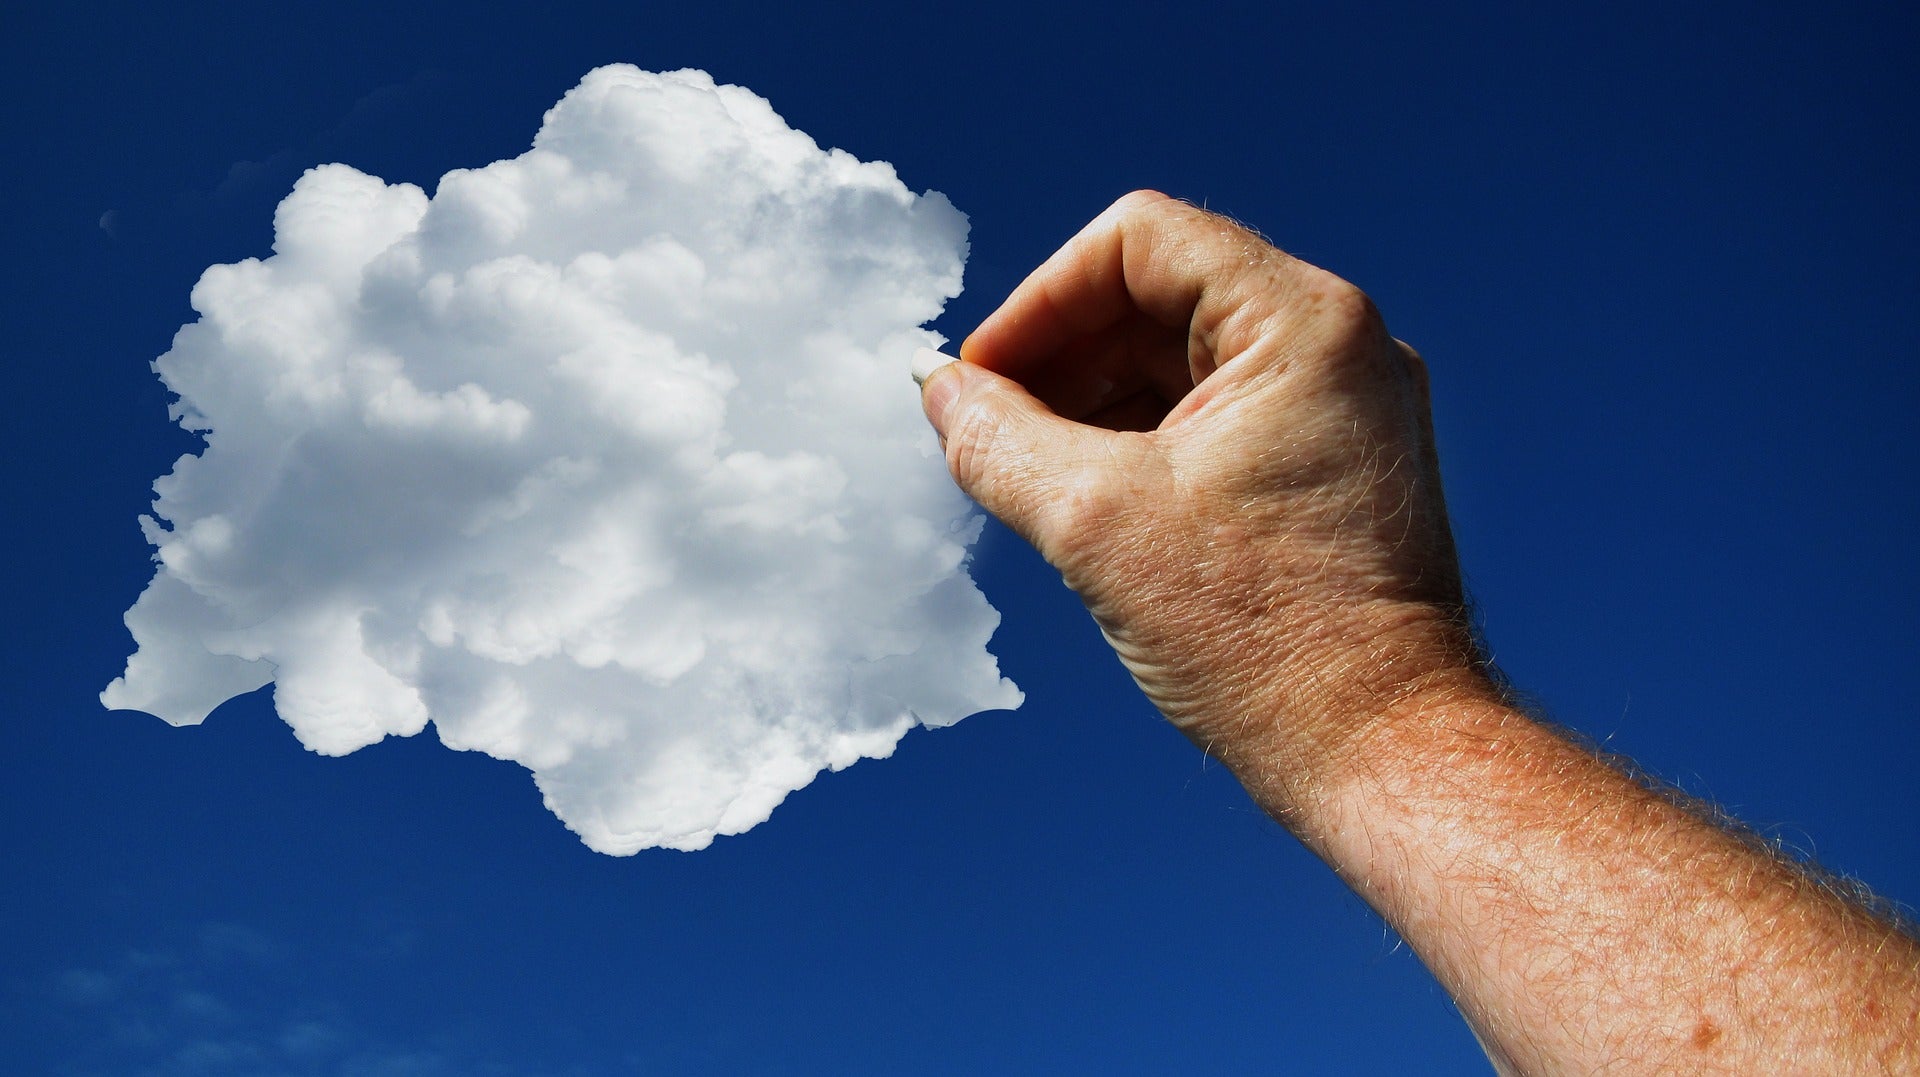 Misconfigured Clouds Spewing Sensitive Data, Warns McAfee